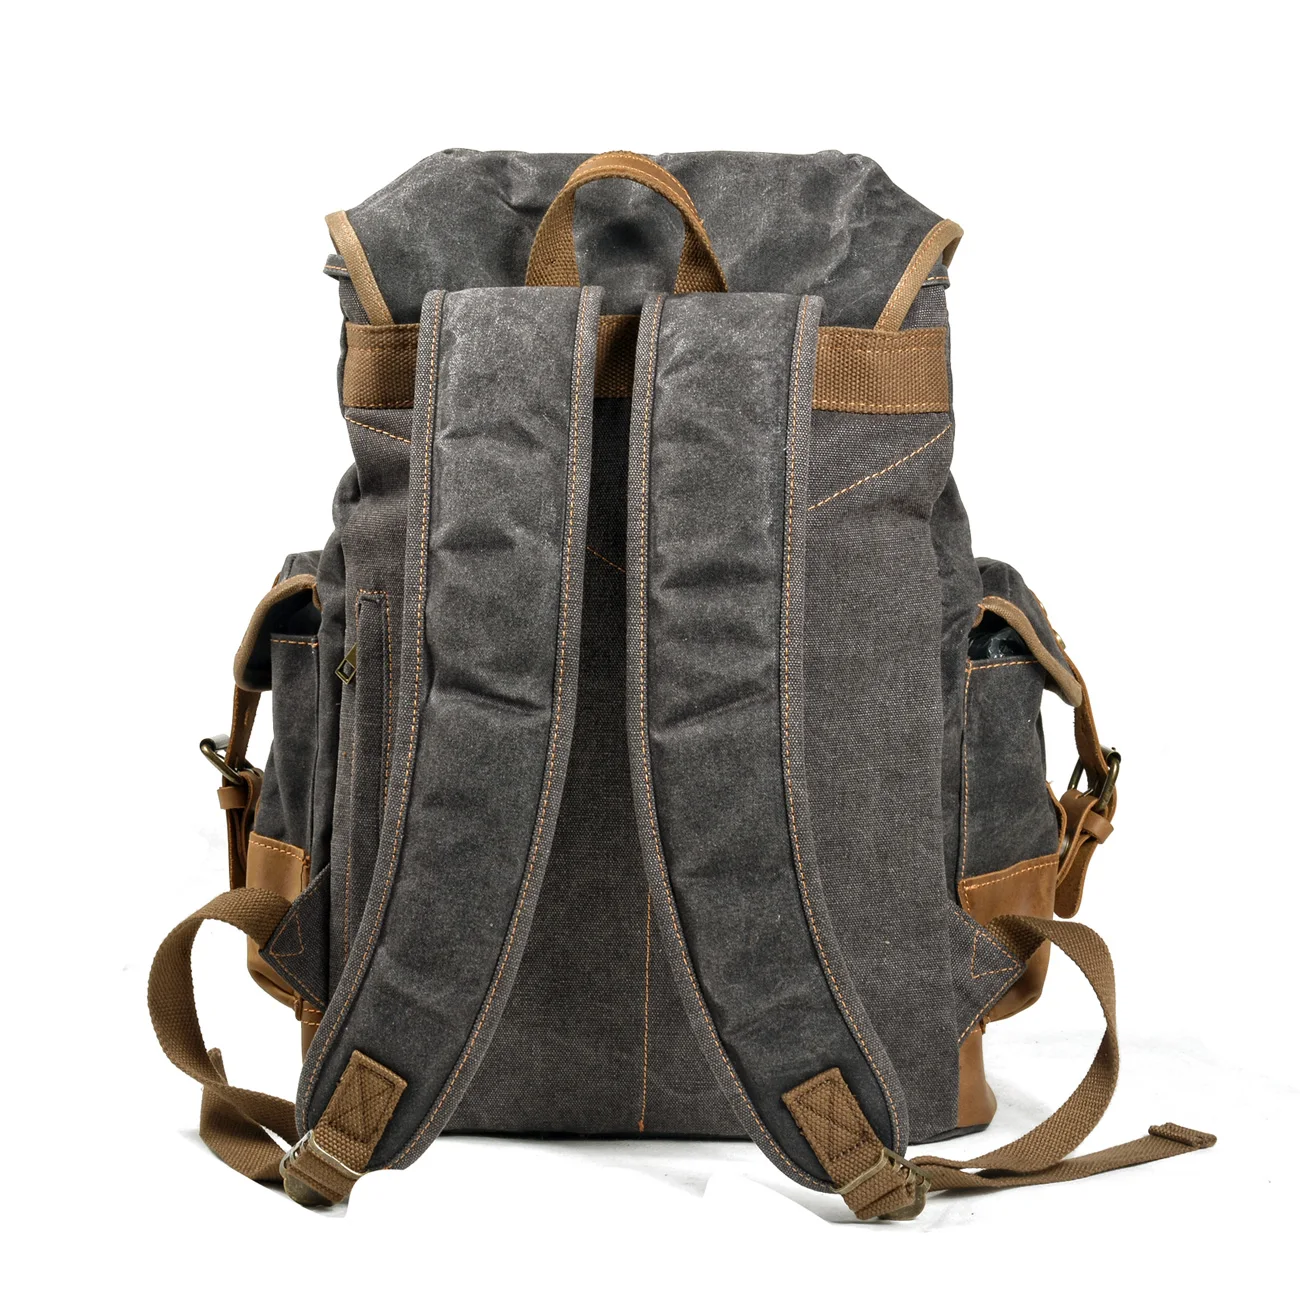 Waterproof Wax Canvas Hiking Fishing Bag Backpack Outdoor Military